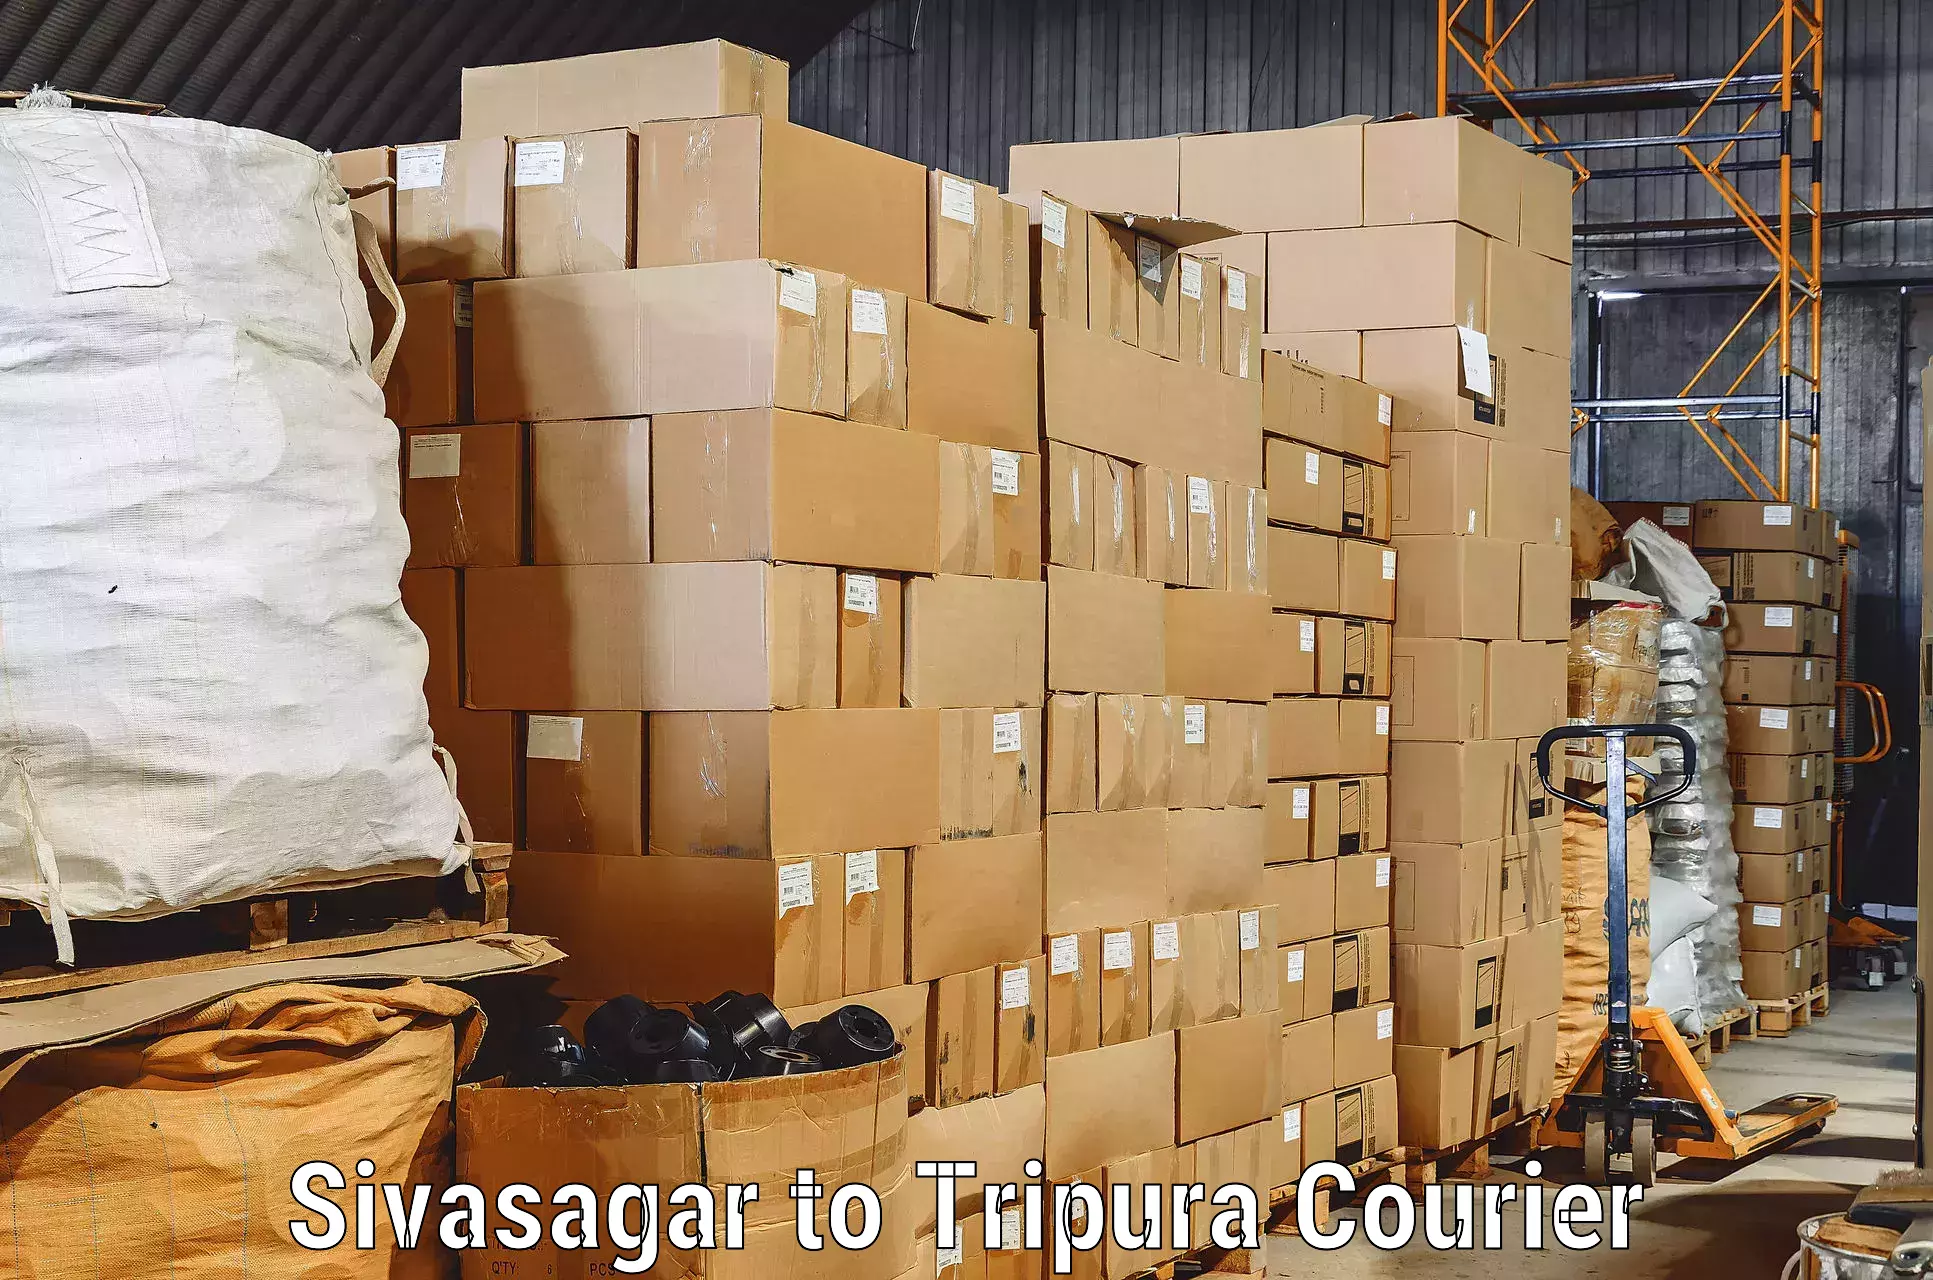 Trusted relocation services Sivasagar to Agartala